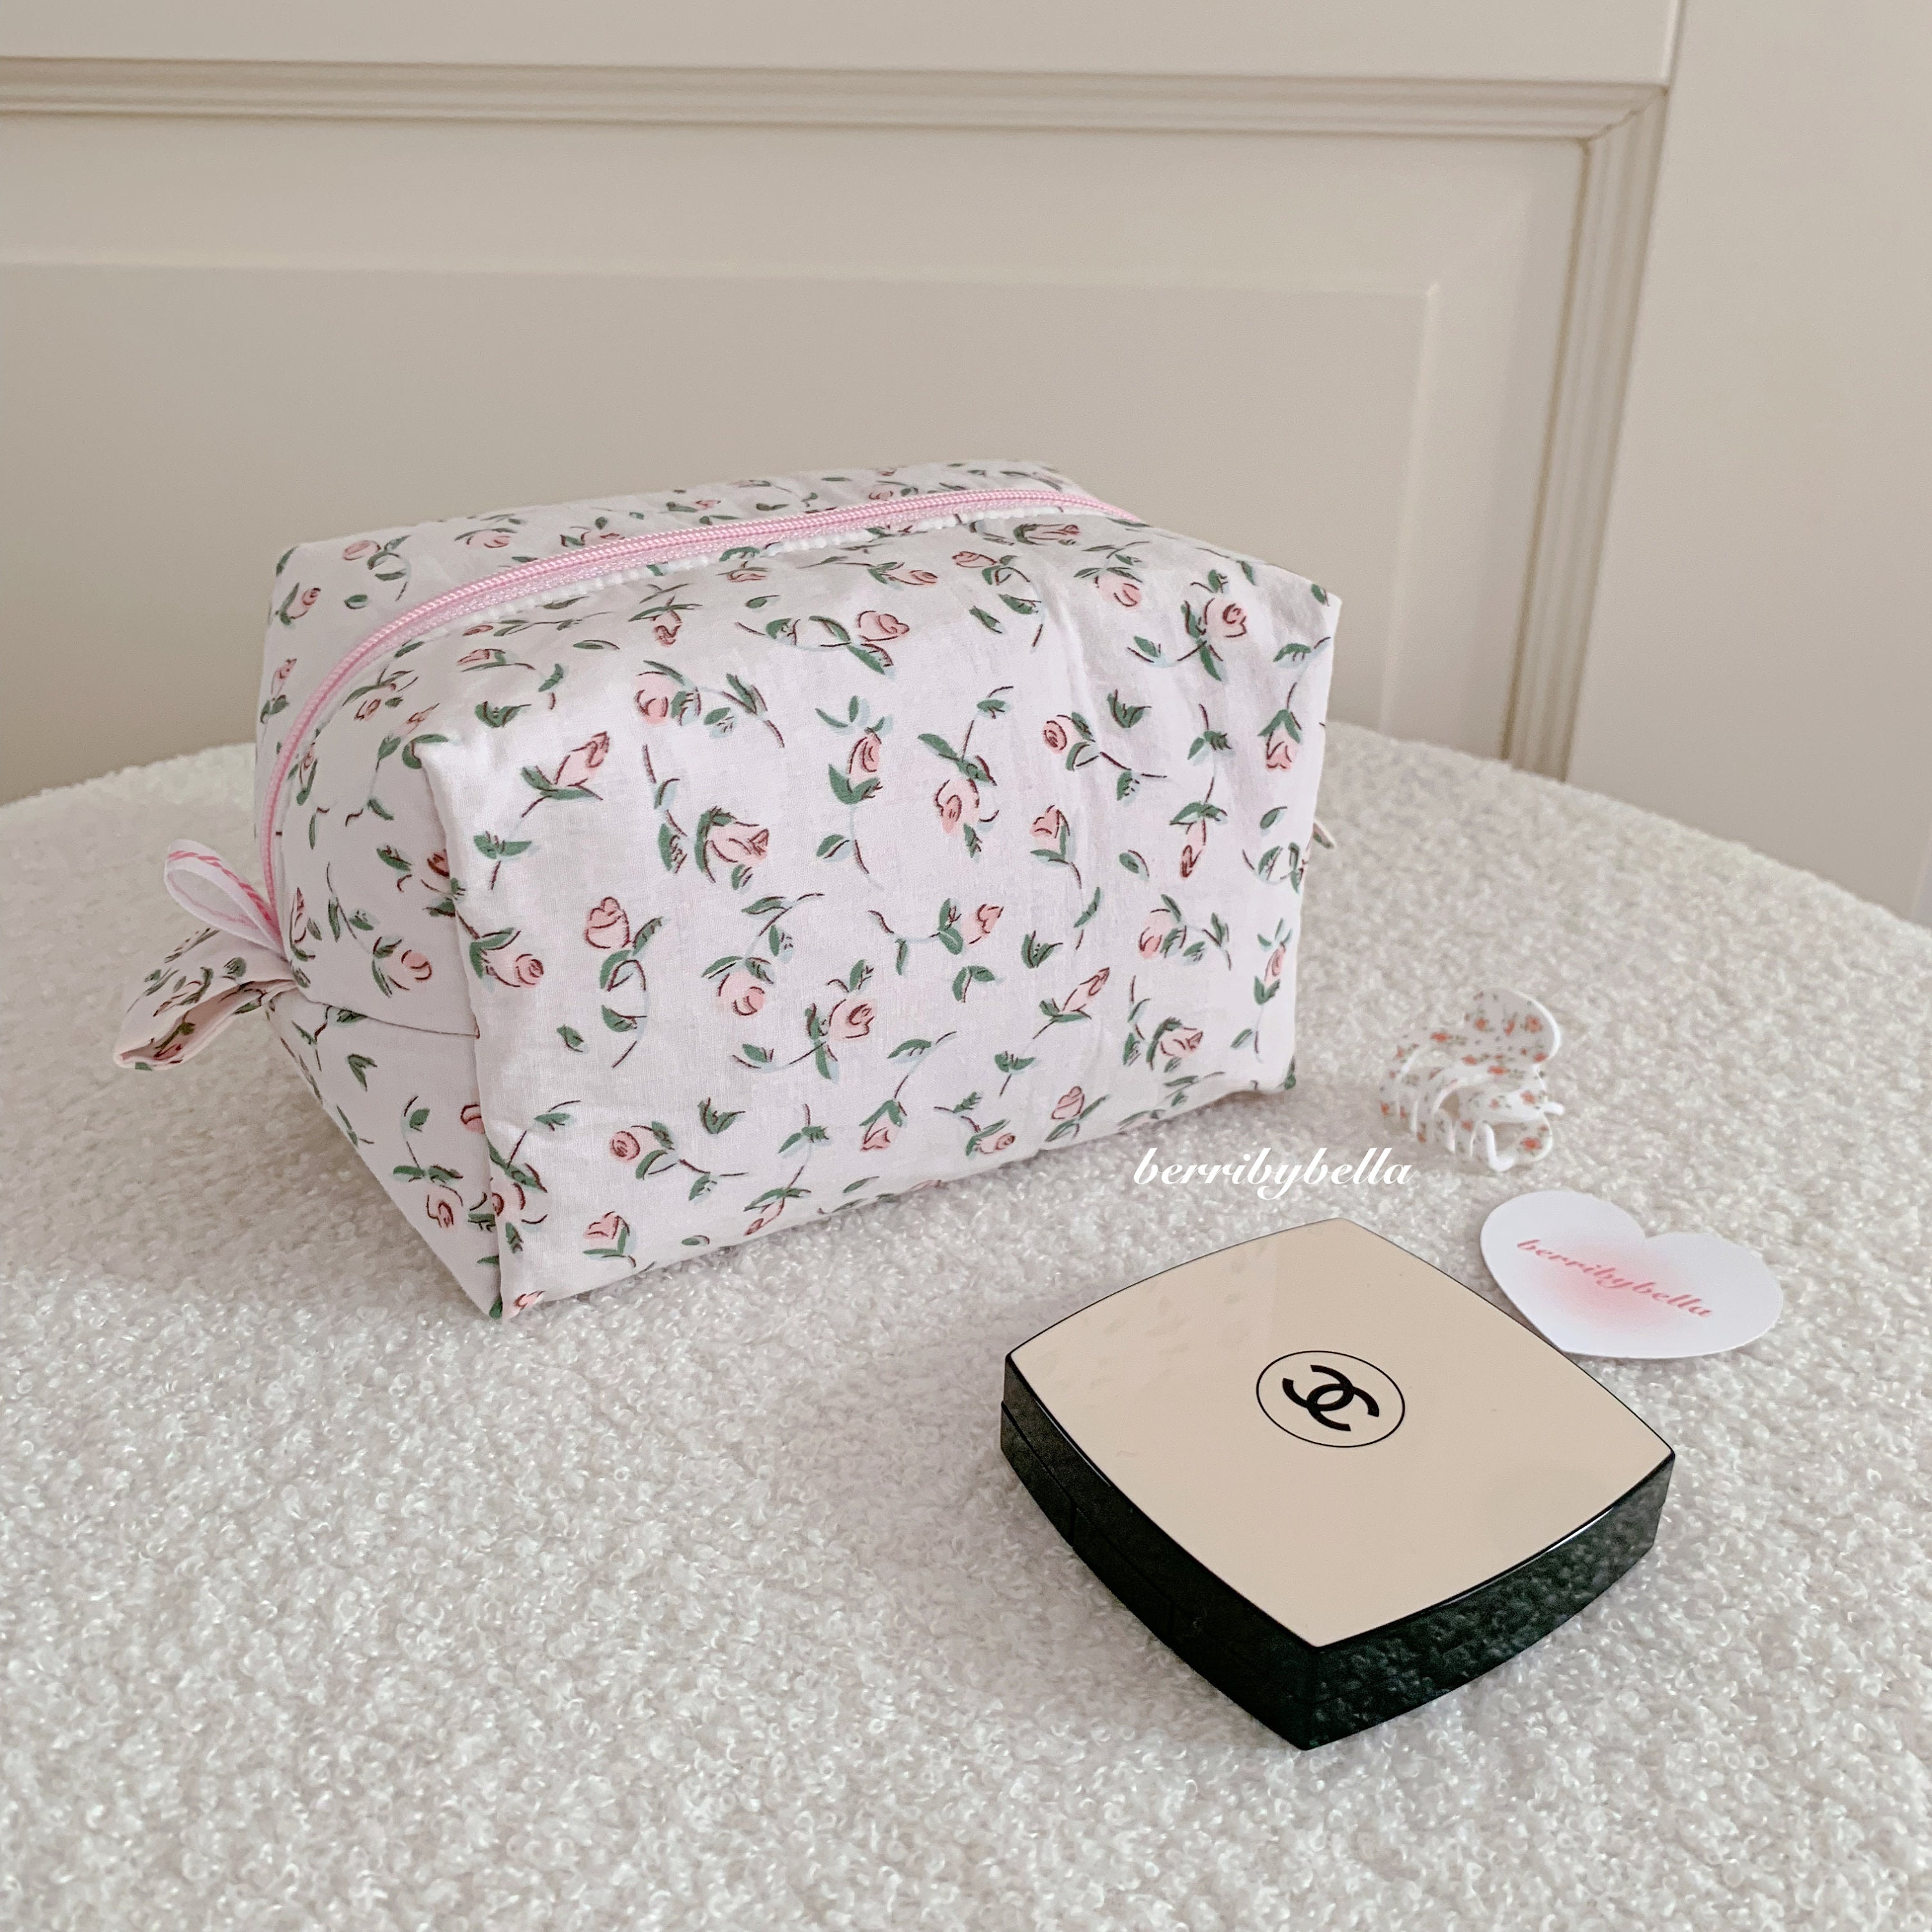 CHANEL Beaute Pink Cosmetic Makeup Bag VIP Gift New no box